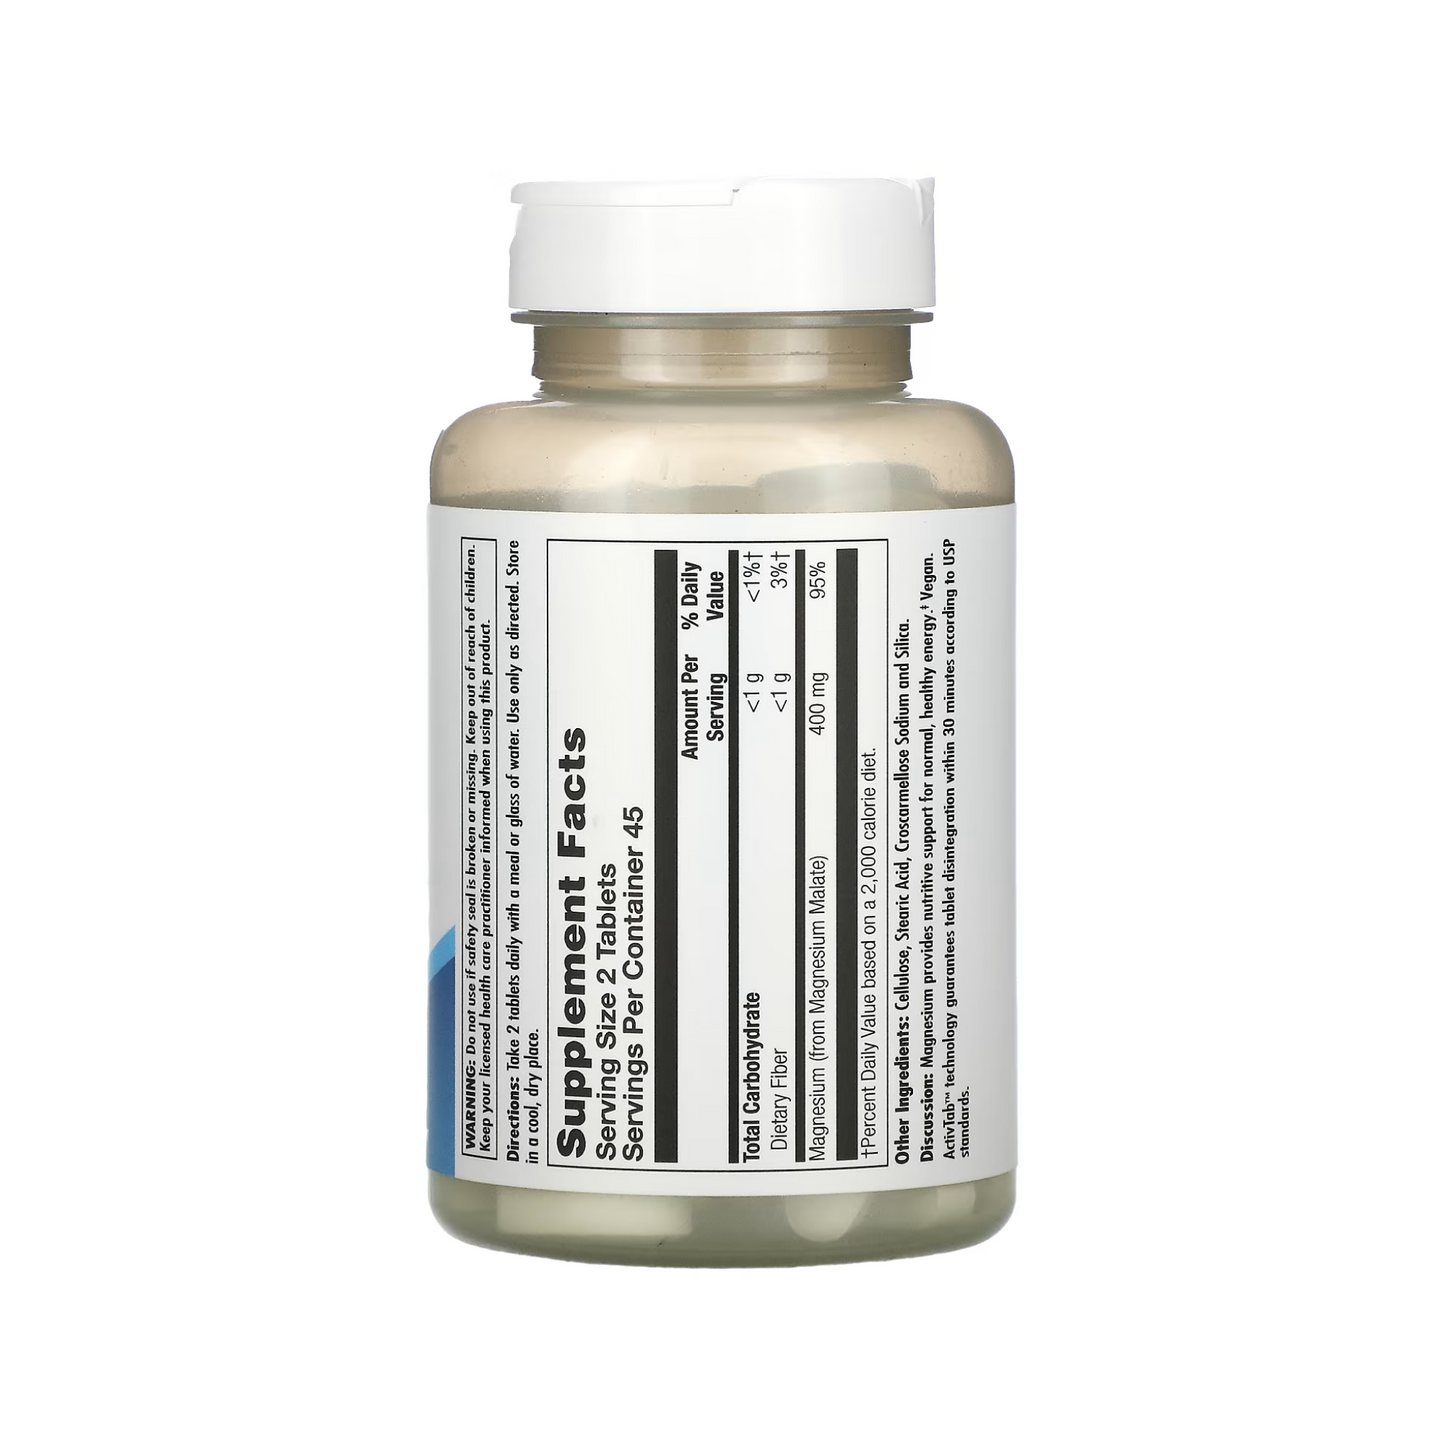 KAL, Malato de Magnésio 400 (200 mg) , 90 Comprimidos